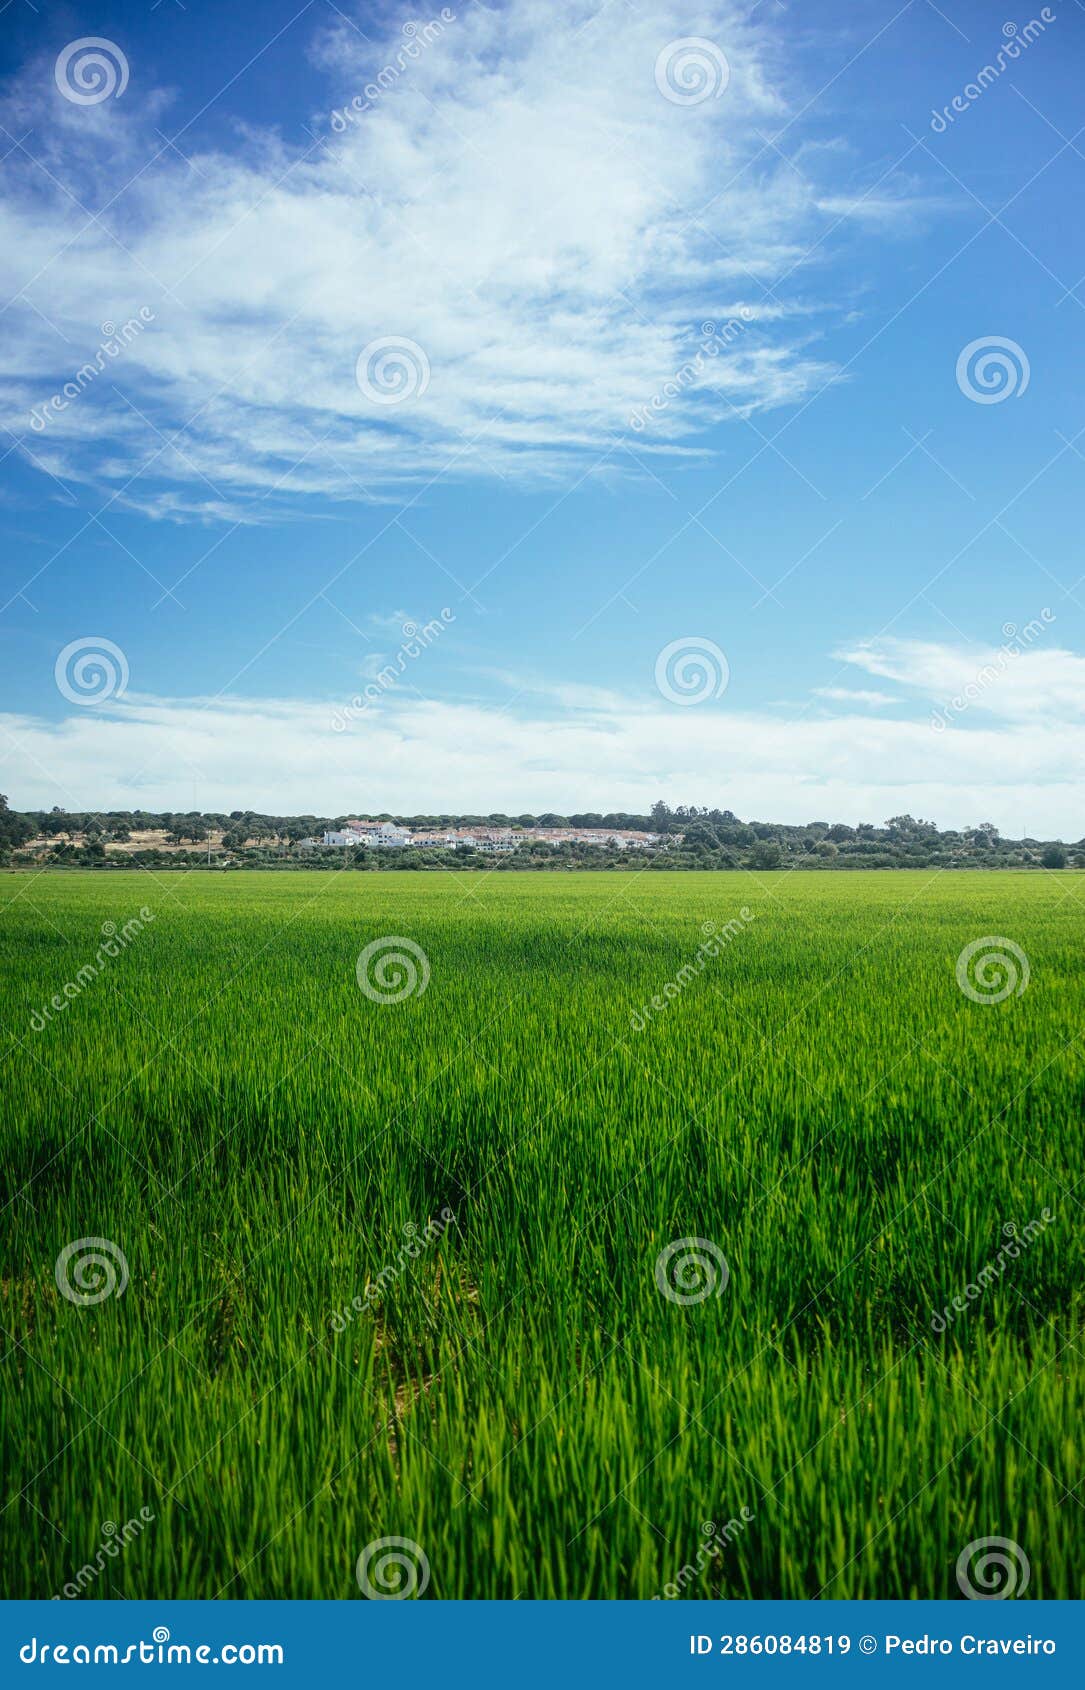 rice field in the area alcÃ¡cer do sal - portugal